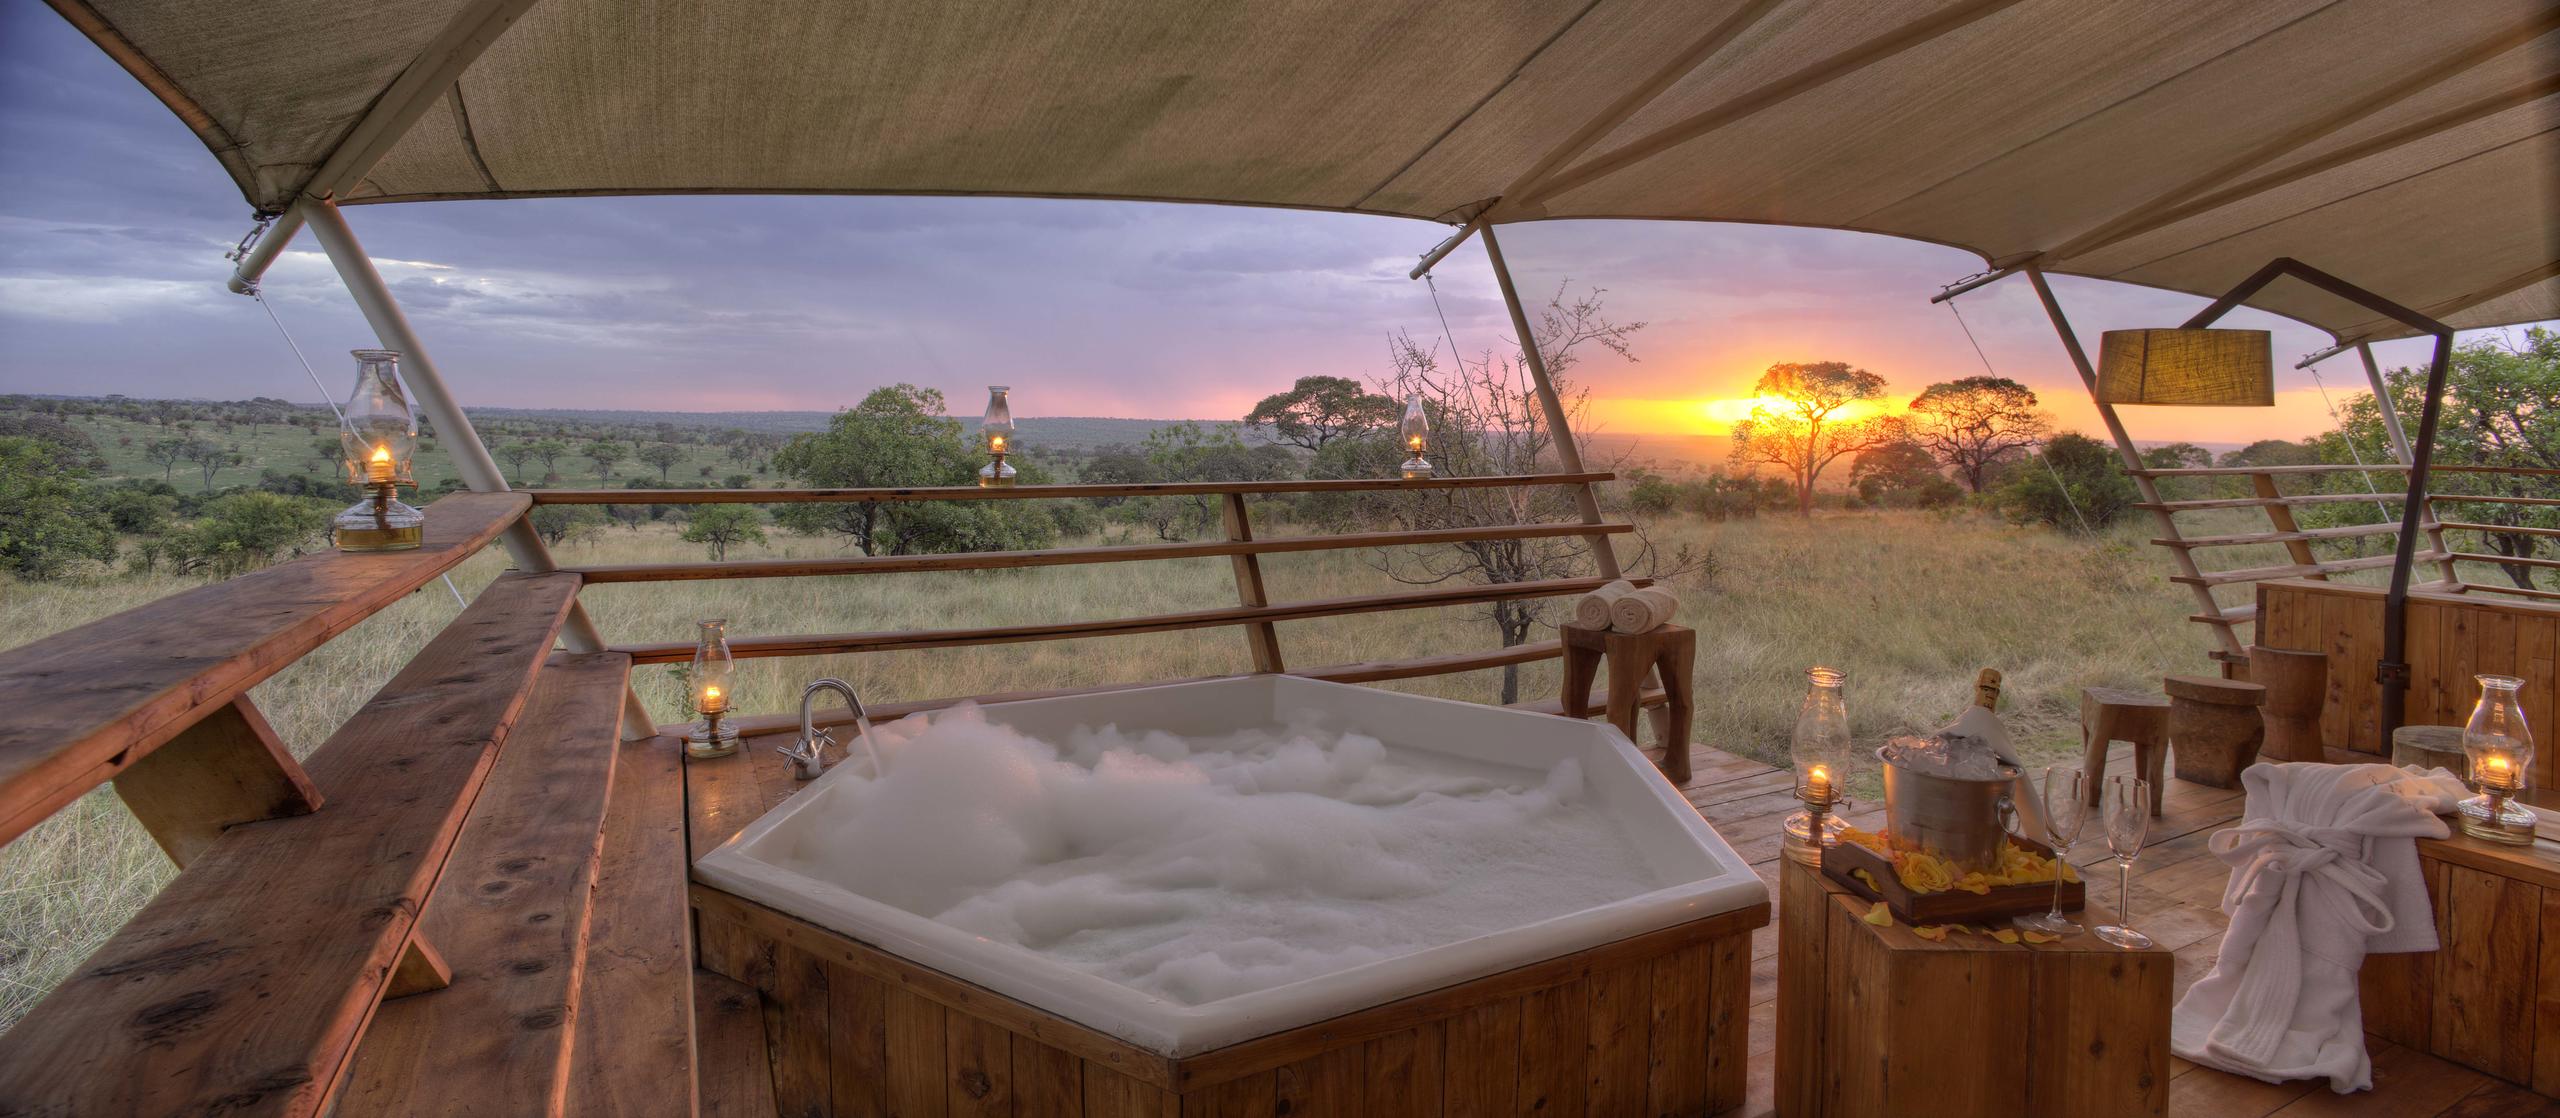 Your very own private bushtub at Serengeti Bushtops, Serengeti National Park, Tanzania